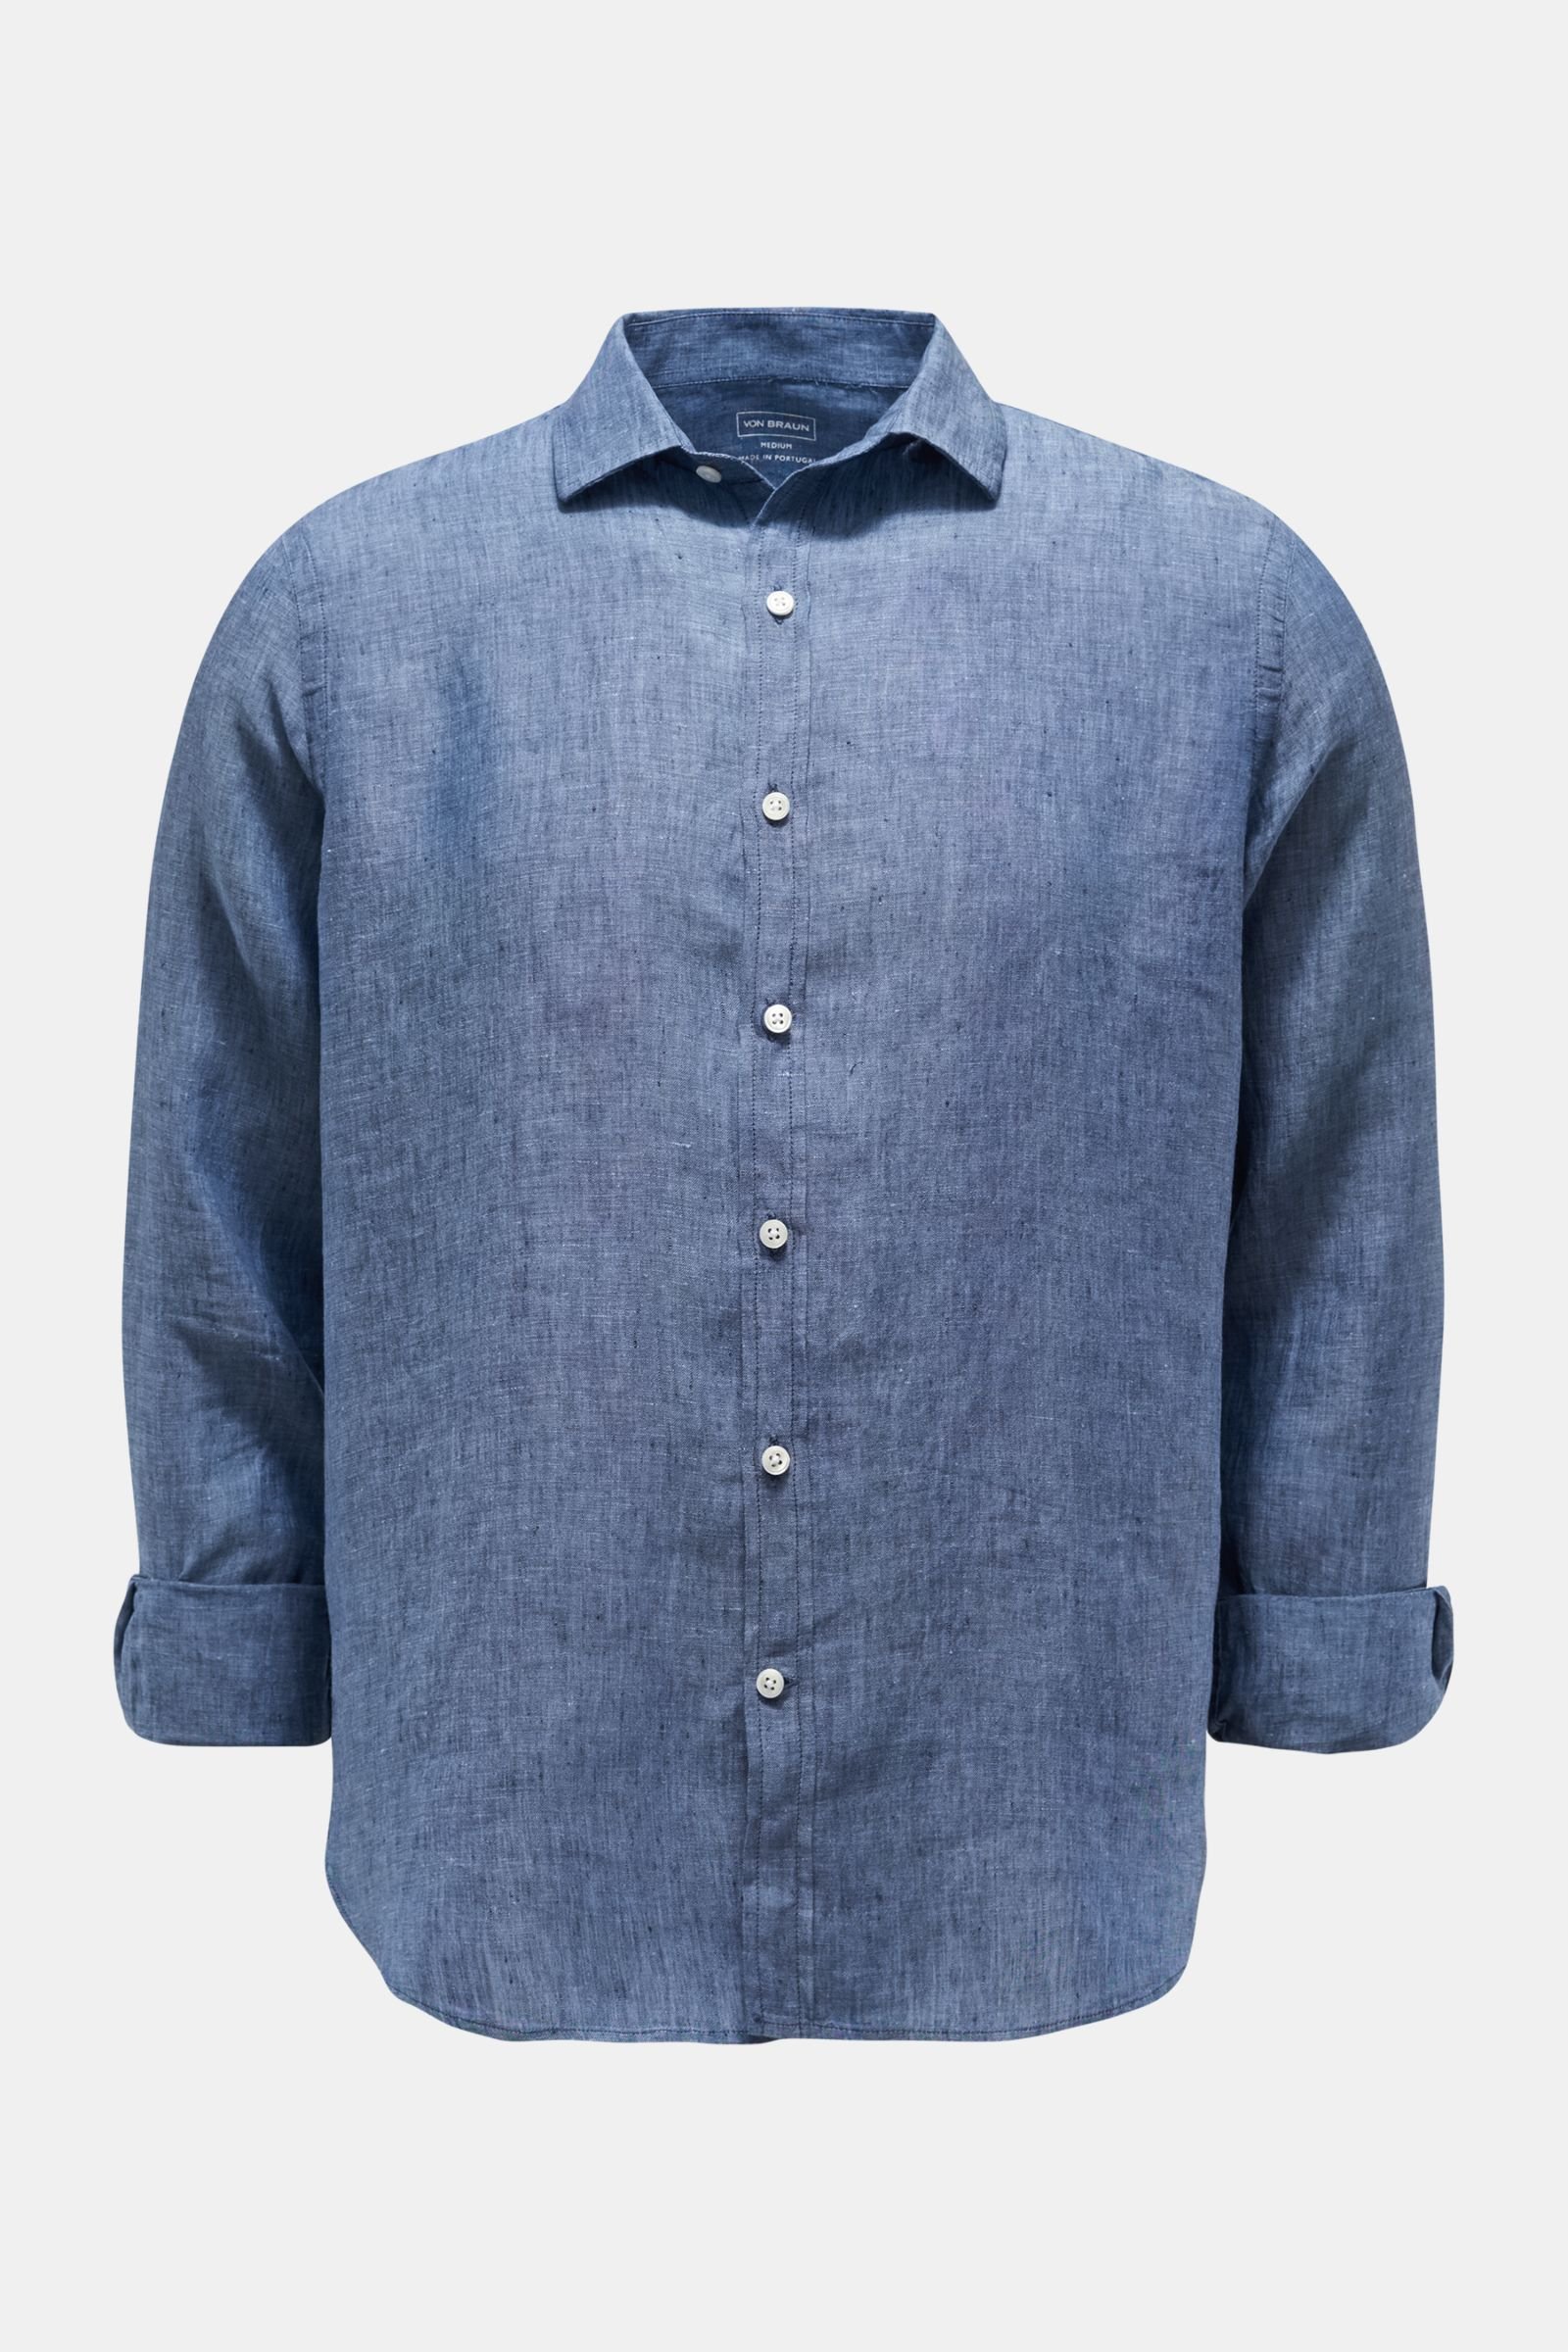 Linen shirt slim collar grey-blue